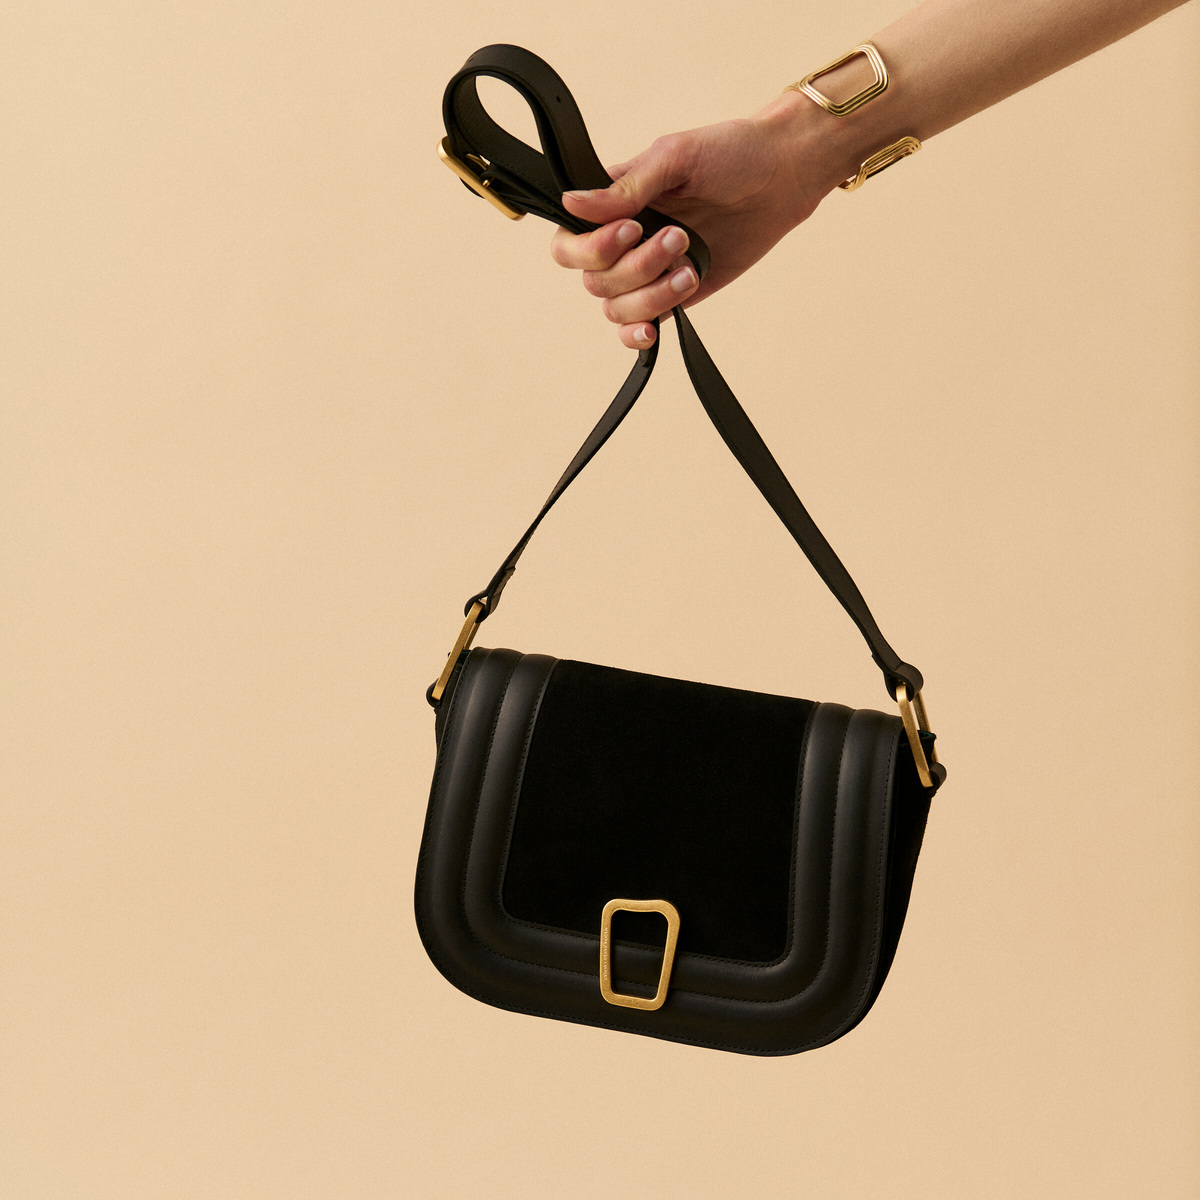 Shoulder bag Barth, City Black - W23 x H16 x D7 cm - 100% leather  - image 1